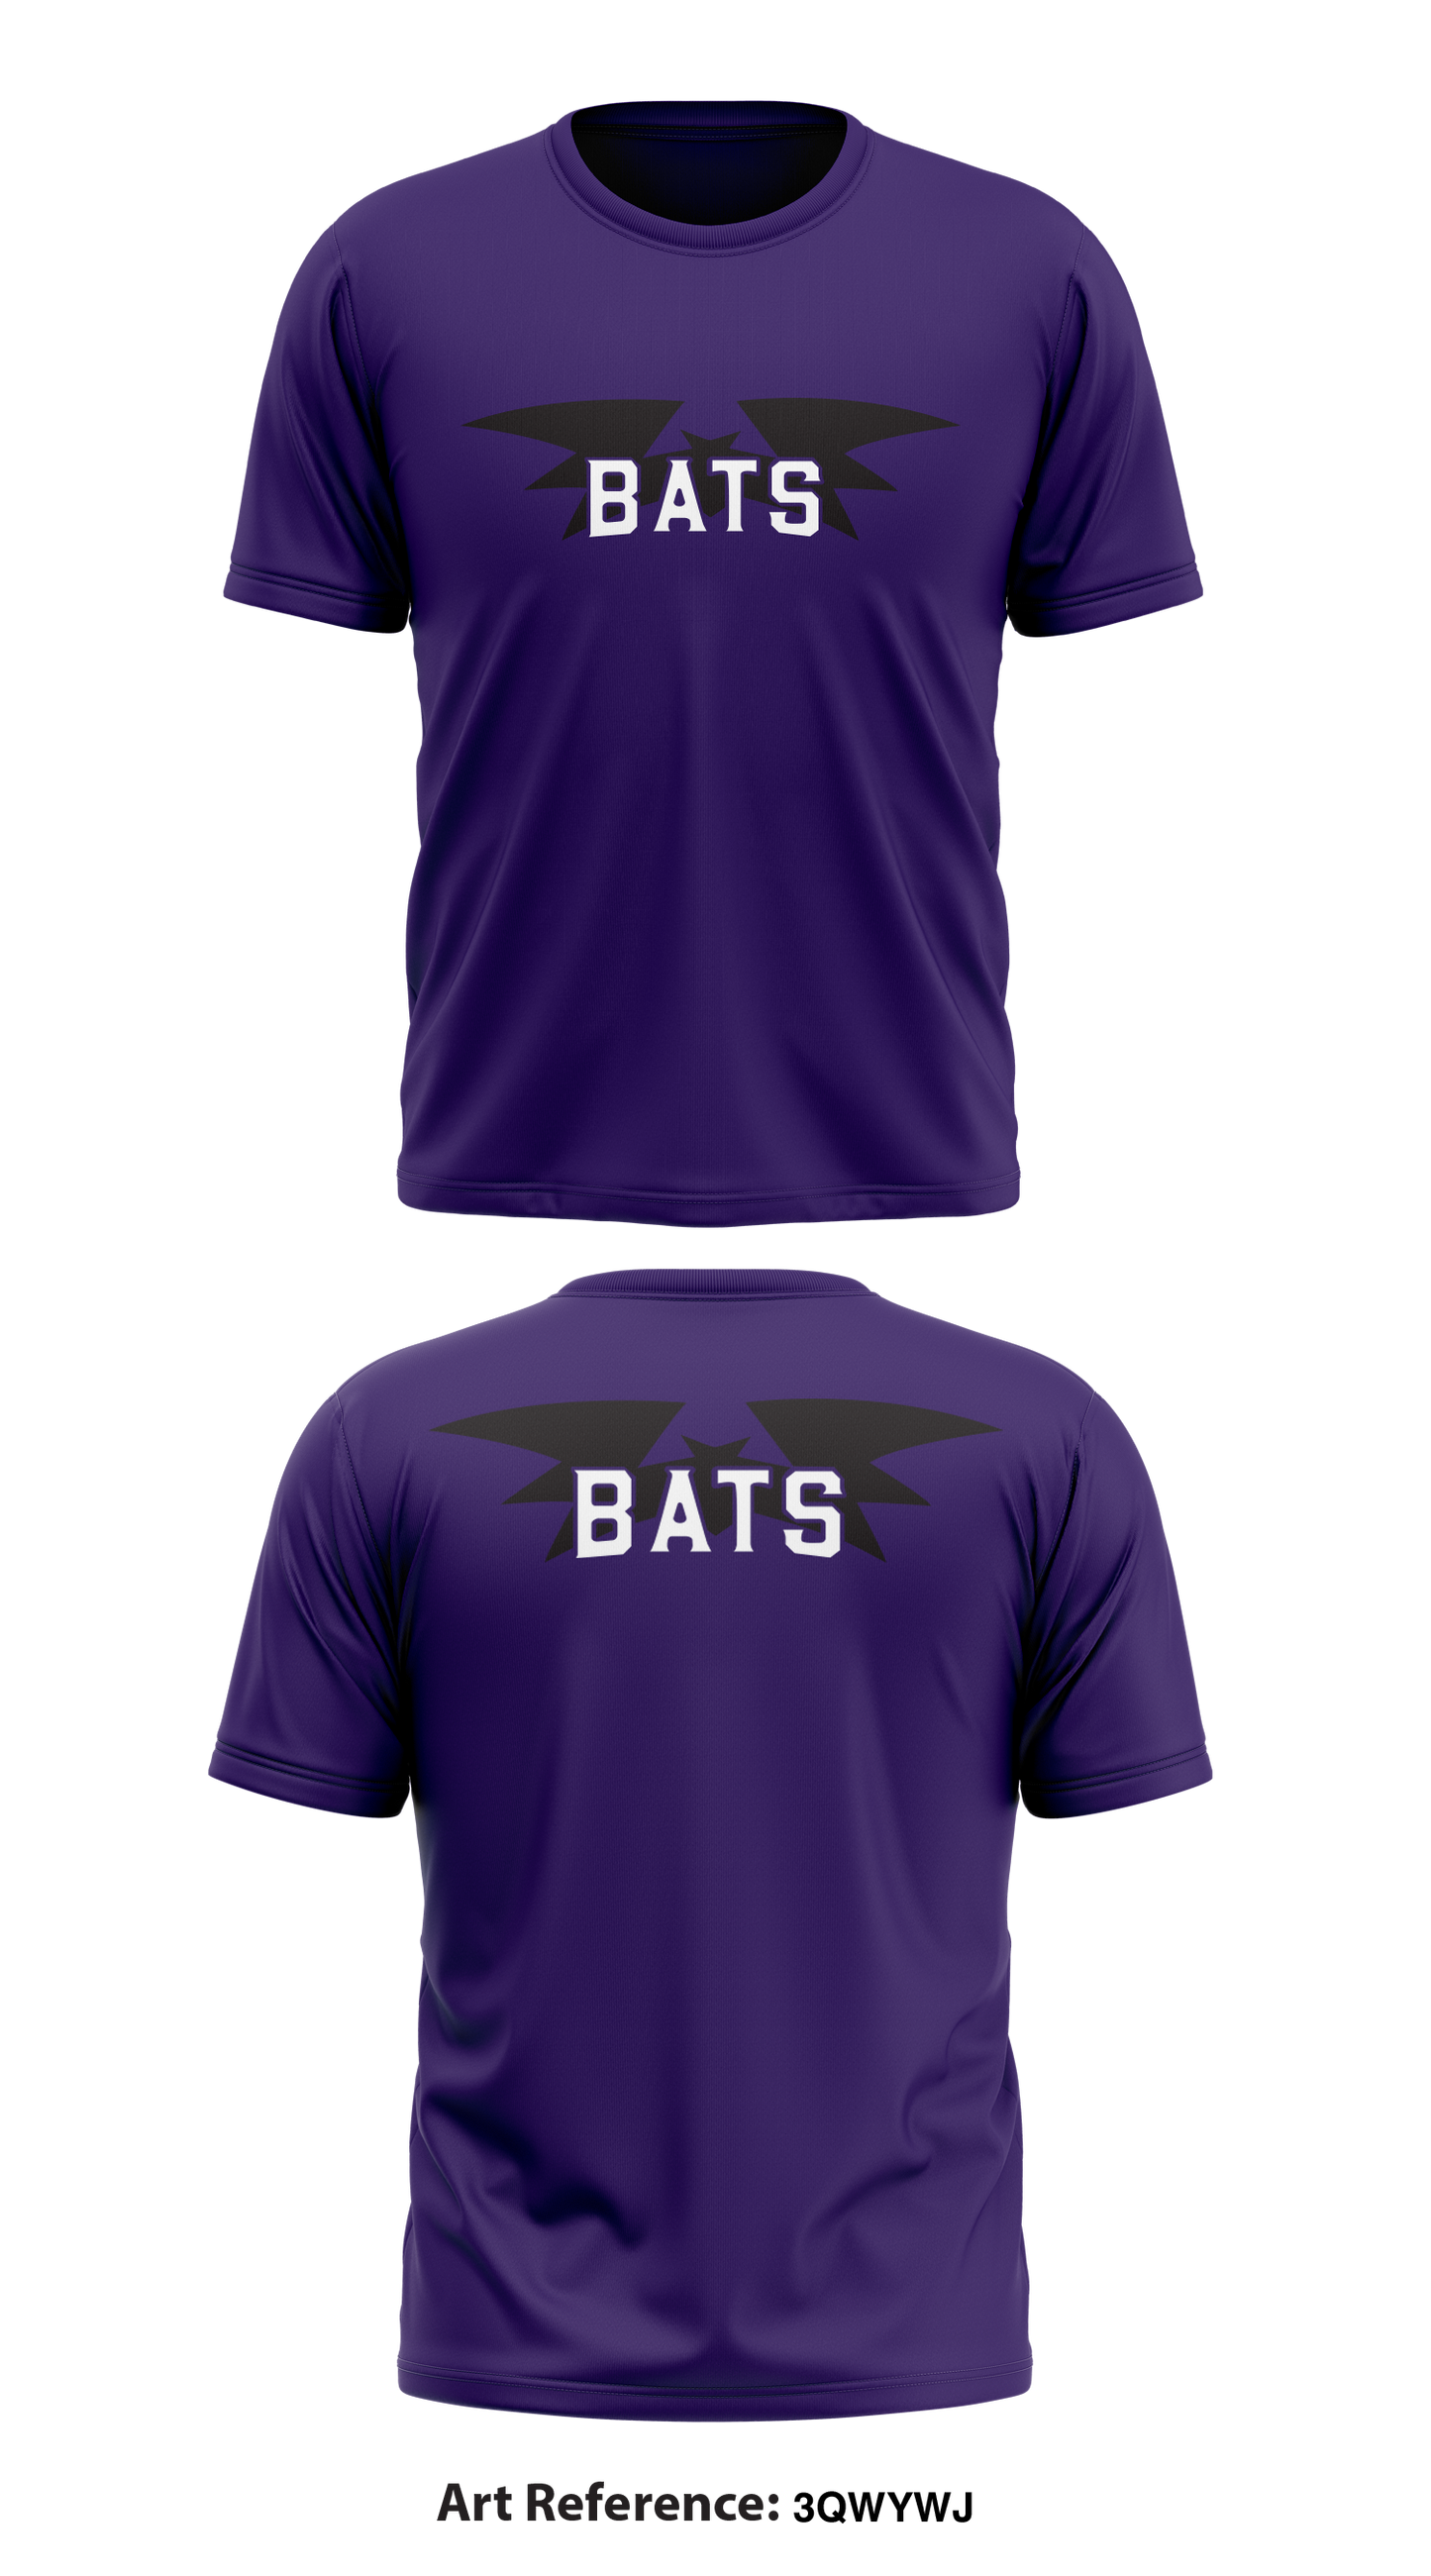 BATS Baseball Club Store 1 Core Men's SS Performance Tee - 3qWYwJ